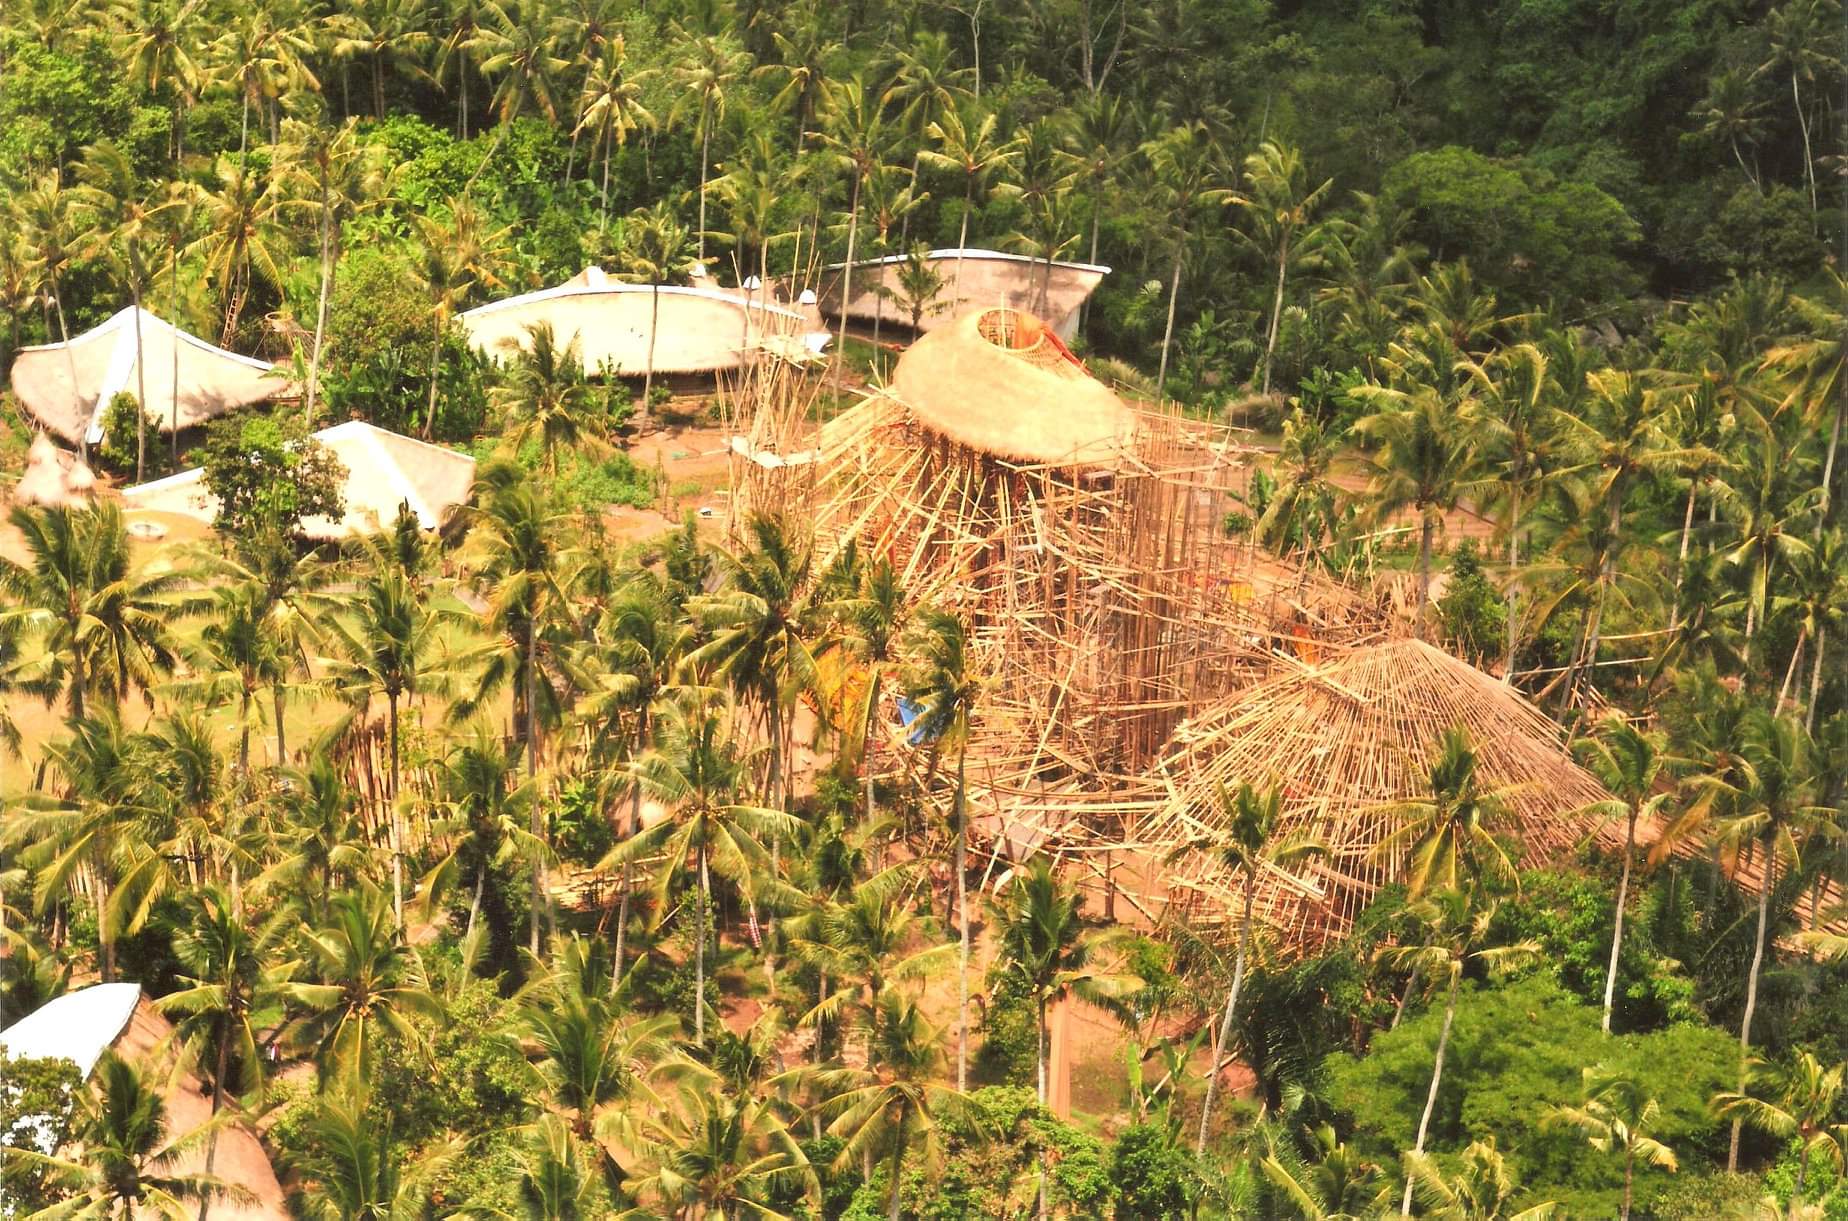 Toda la estructura fue construida enteramente de bambú en un plazo de seis meses.